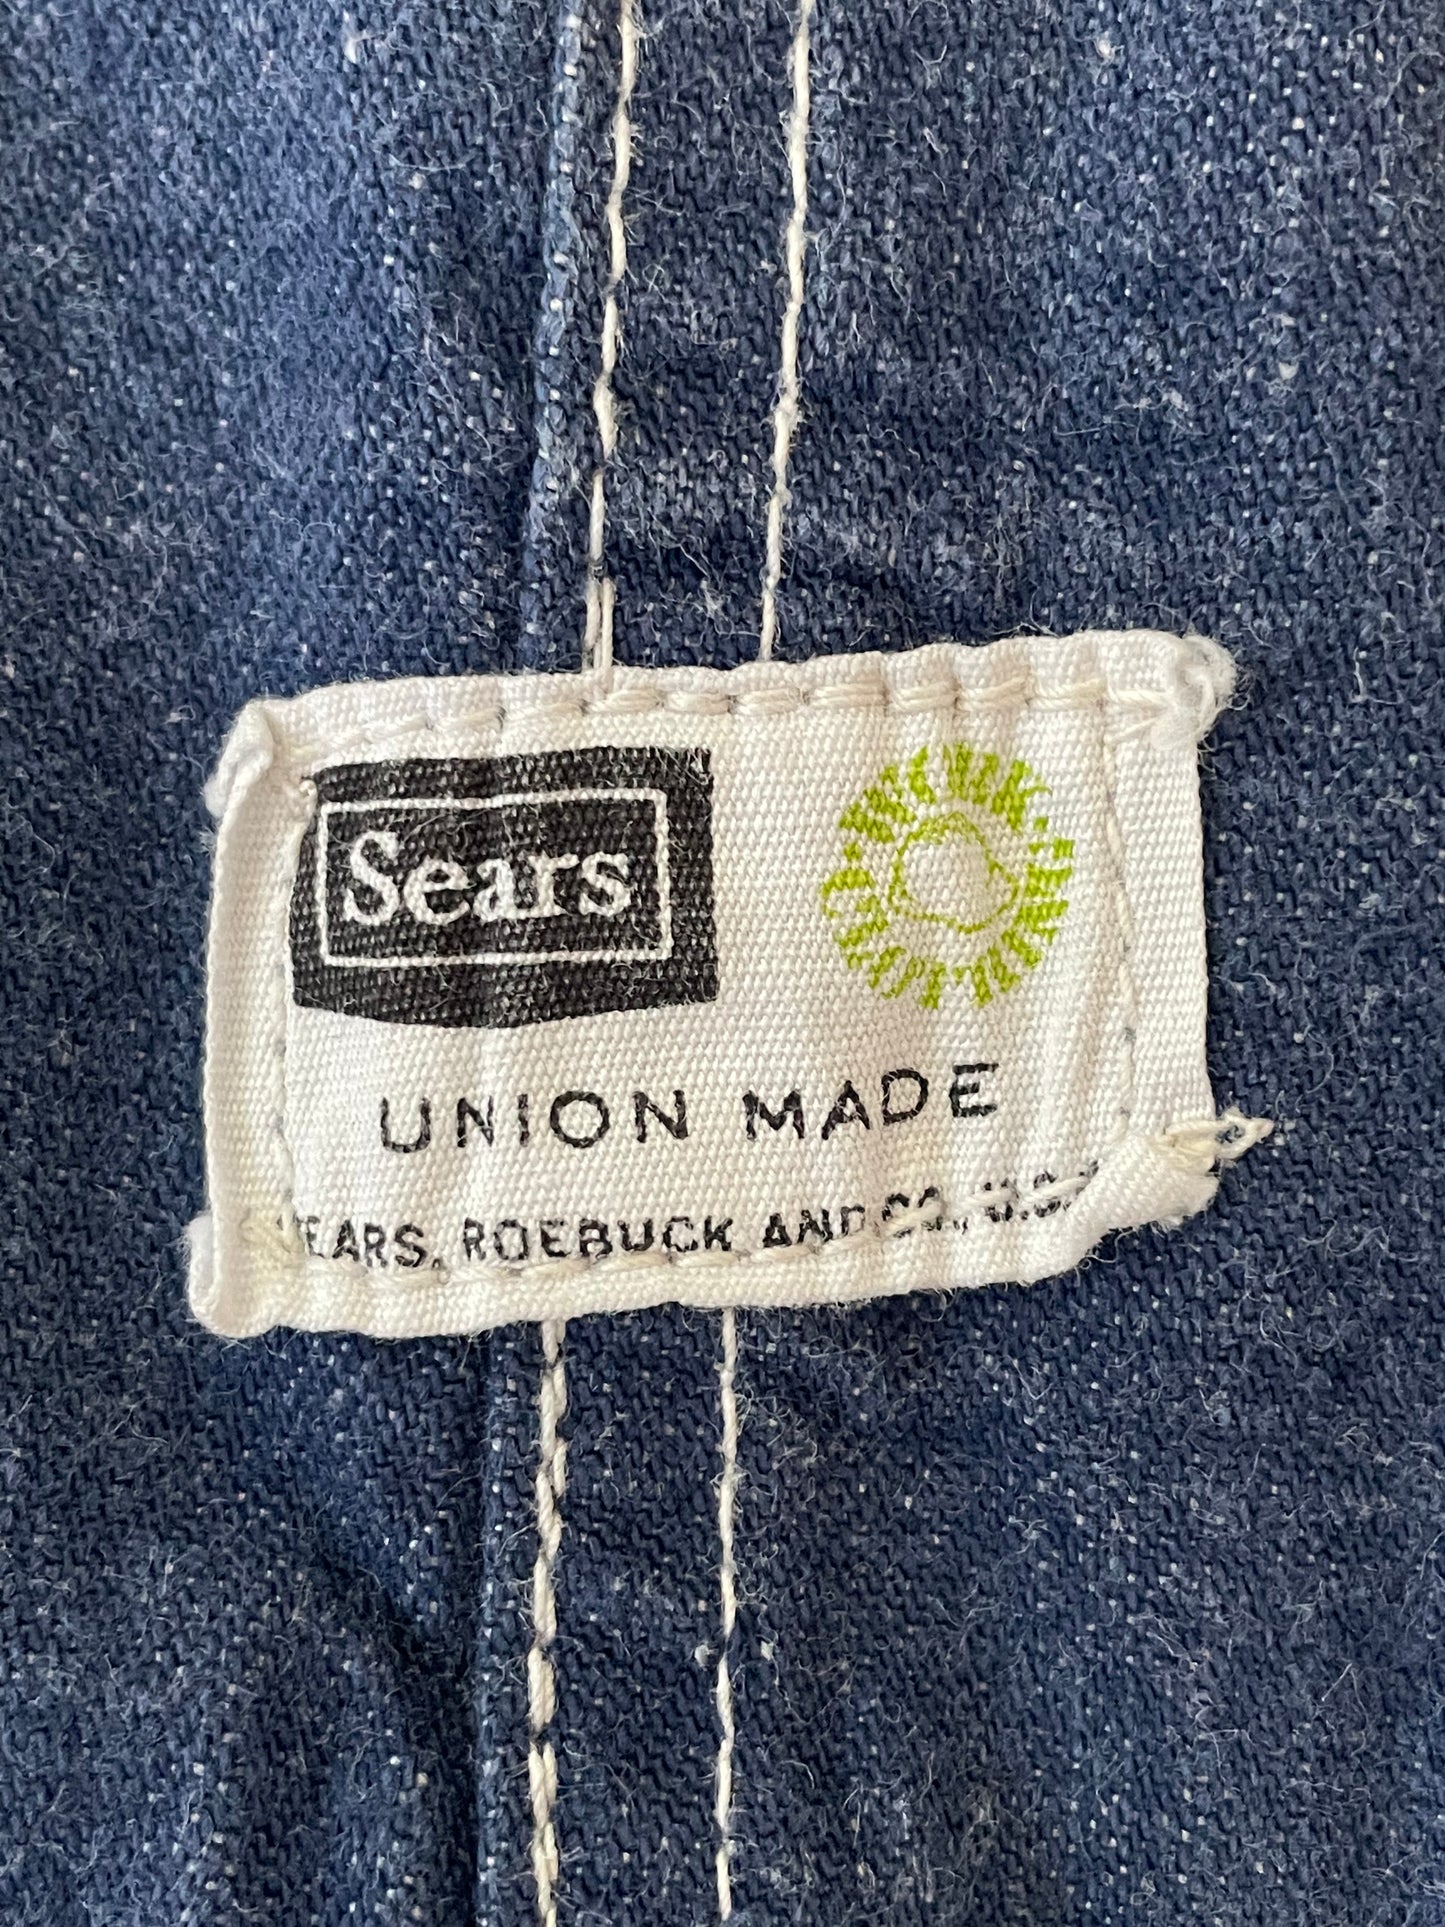 70s/80s Sears Roebuck Dark Wash Overalls